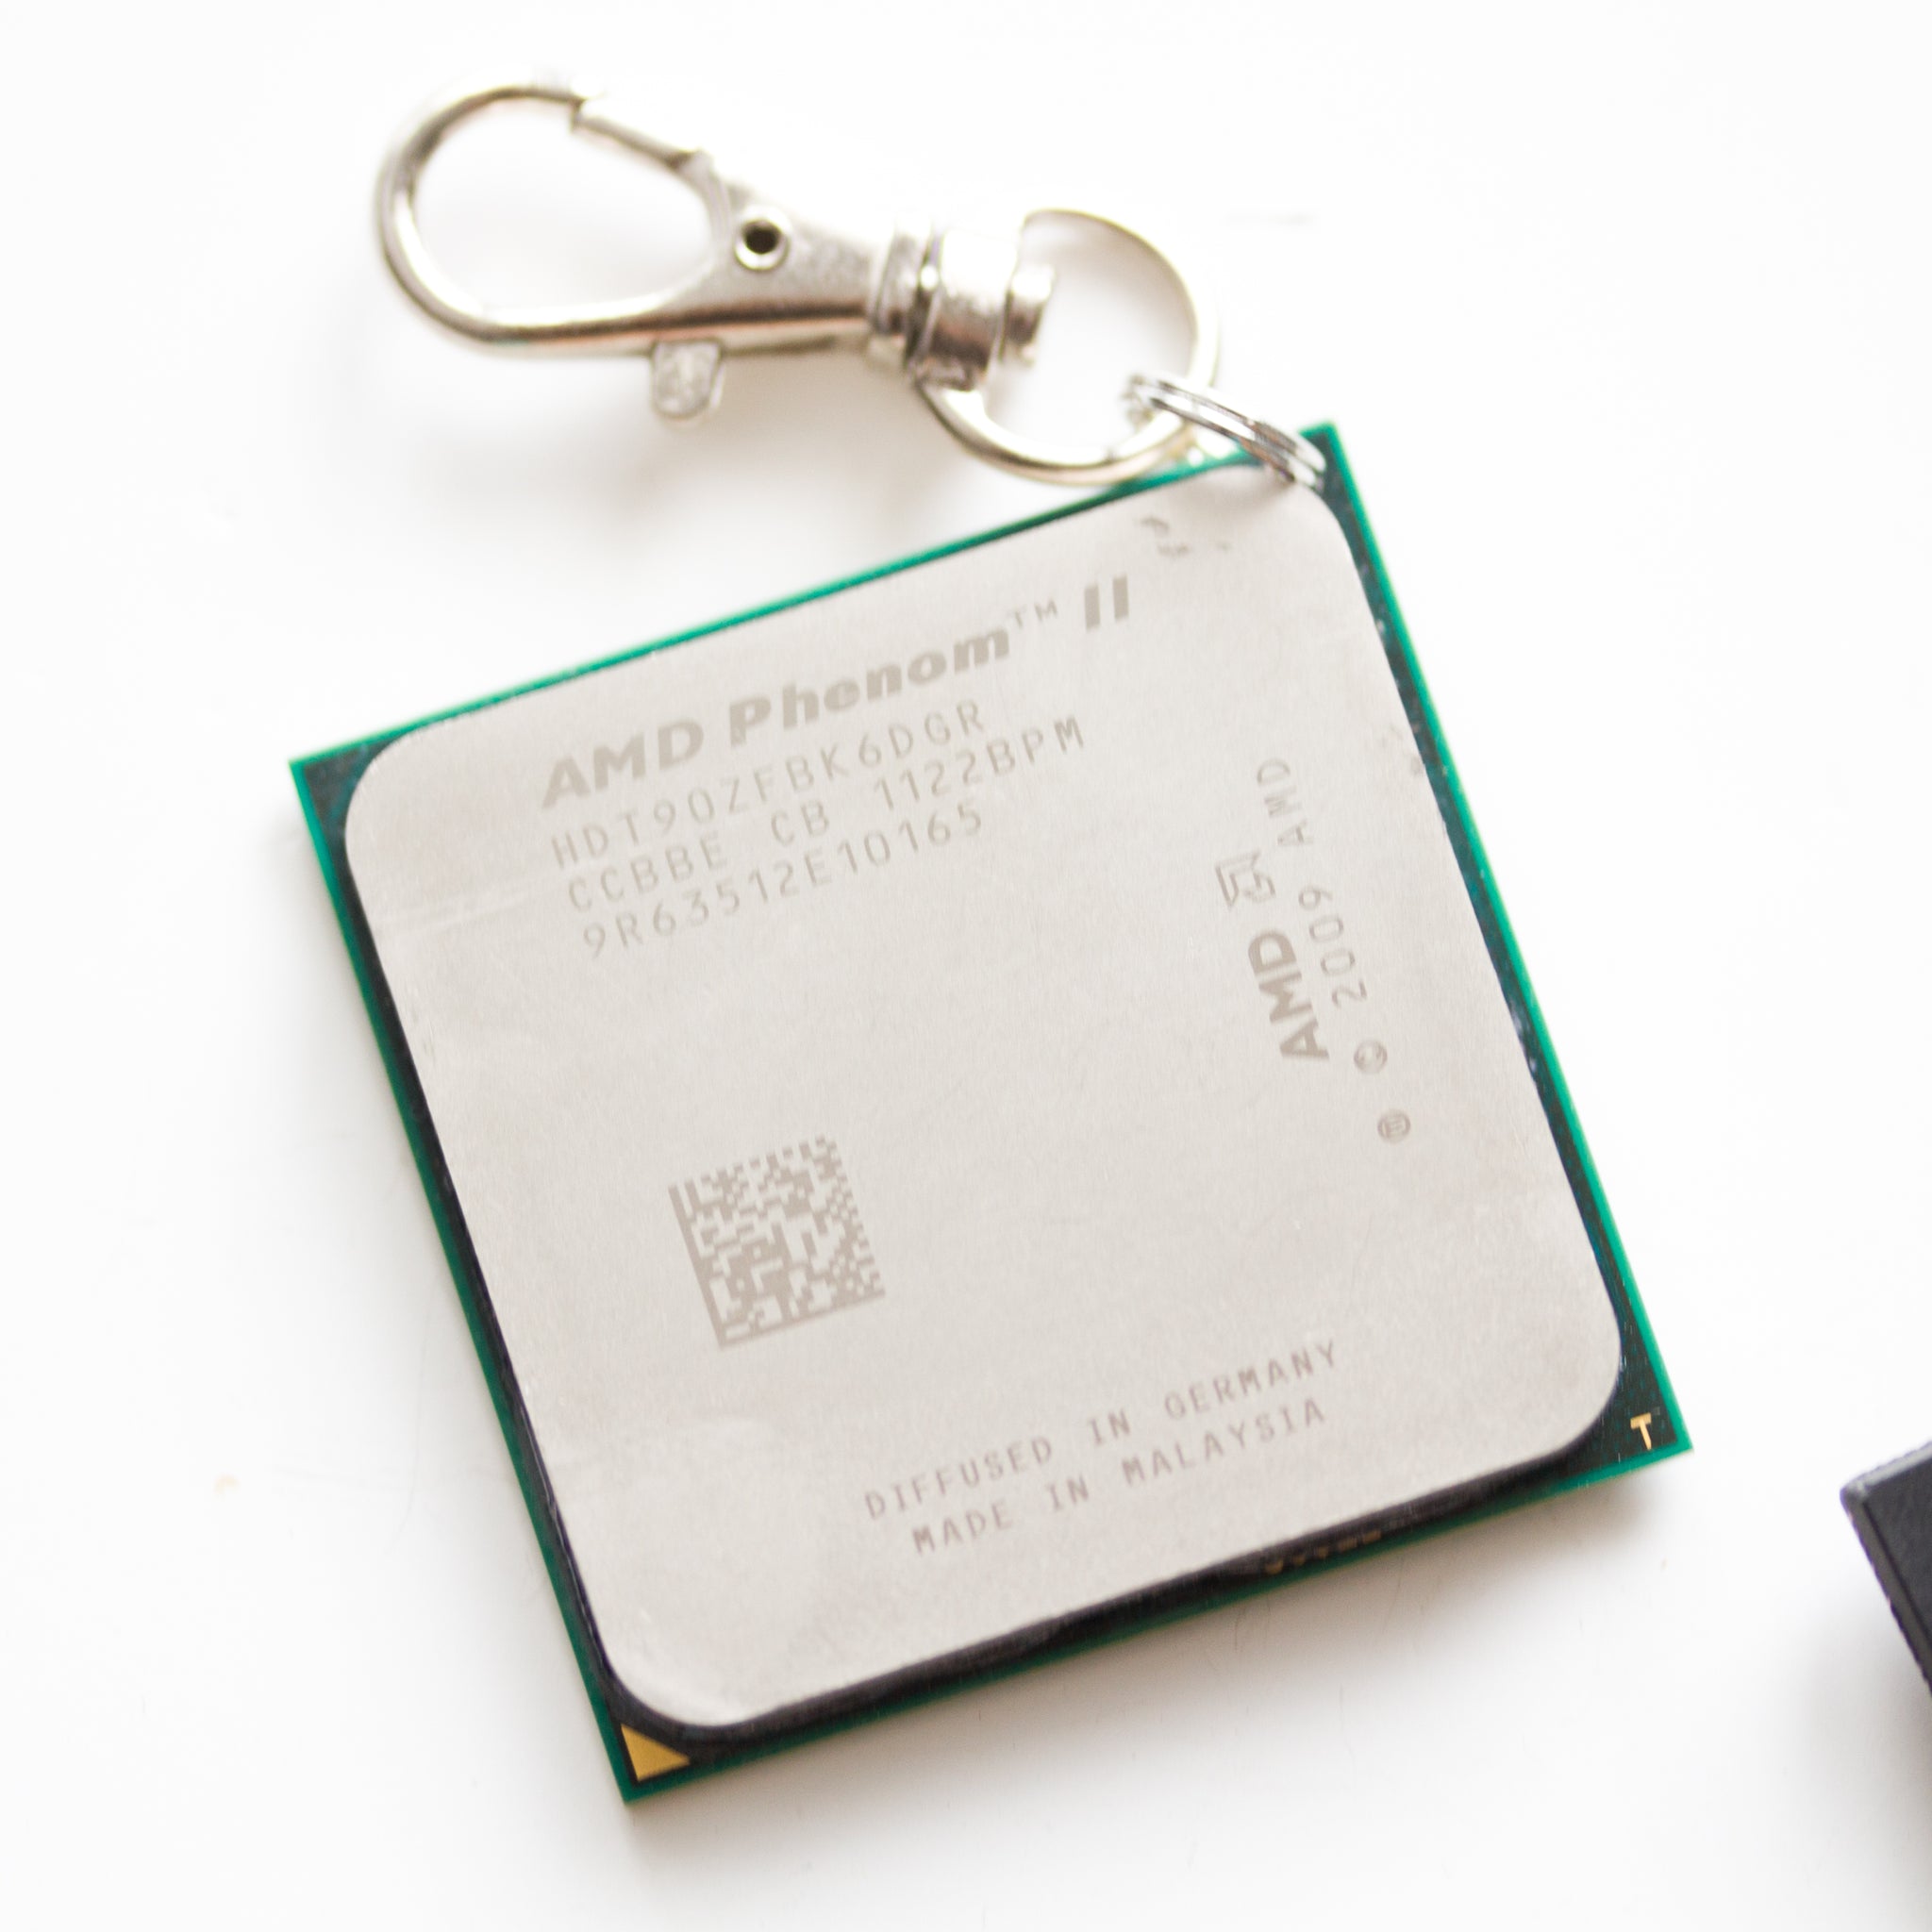 Chipset keychain, recycled computer keychain, graphic processor, GPU